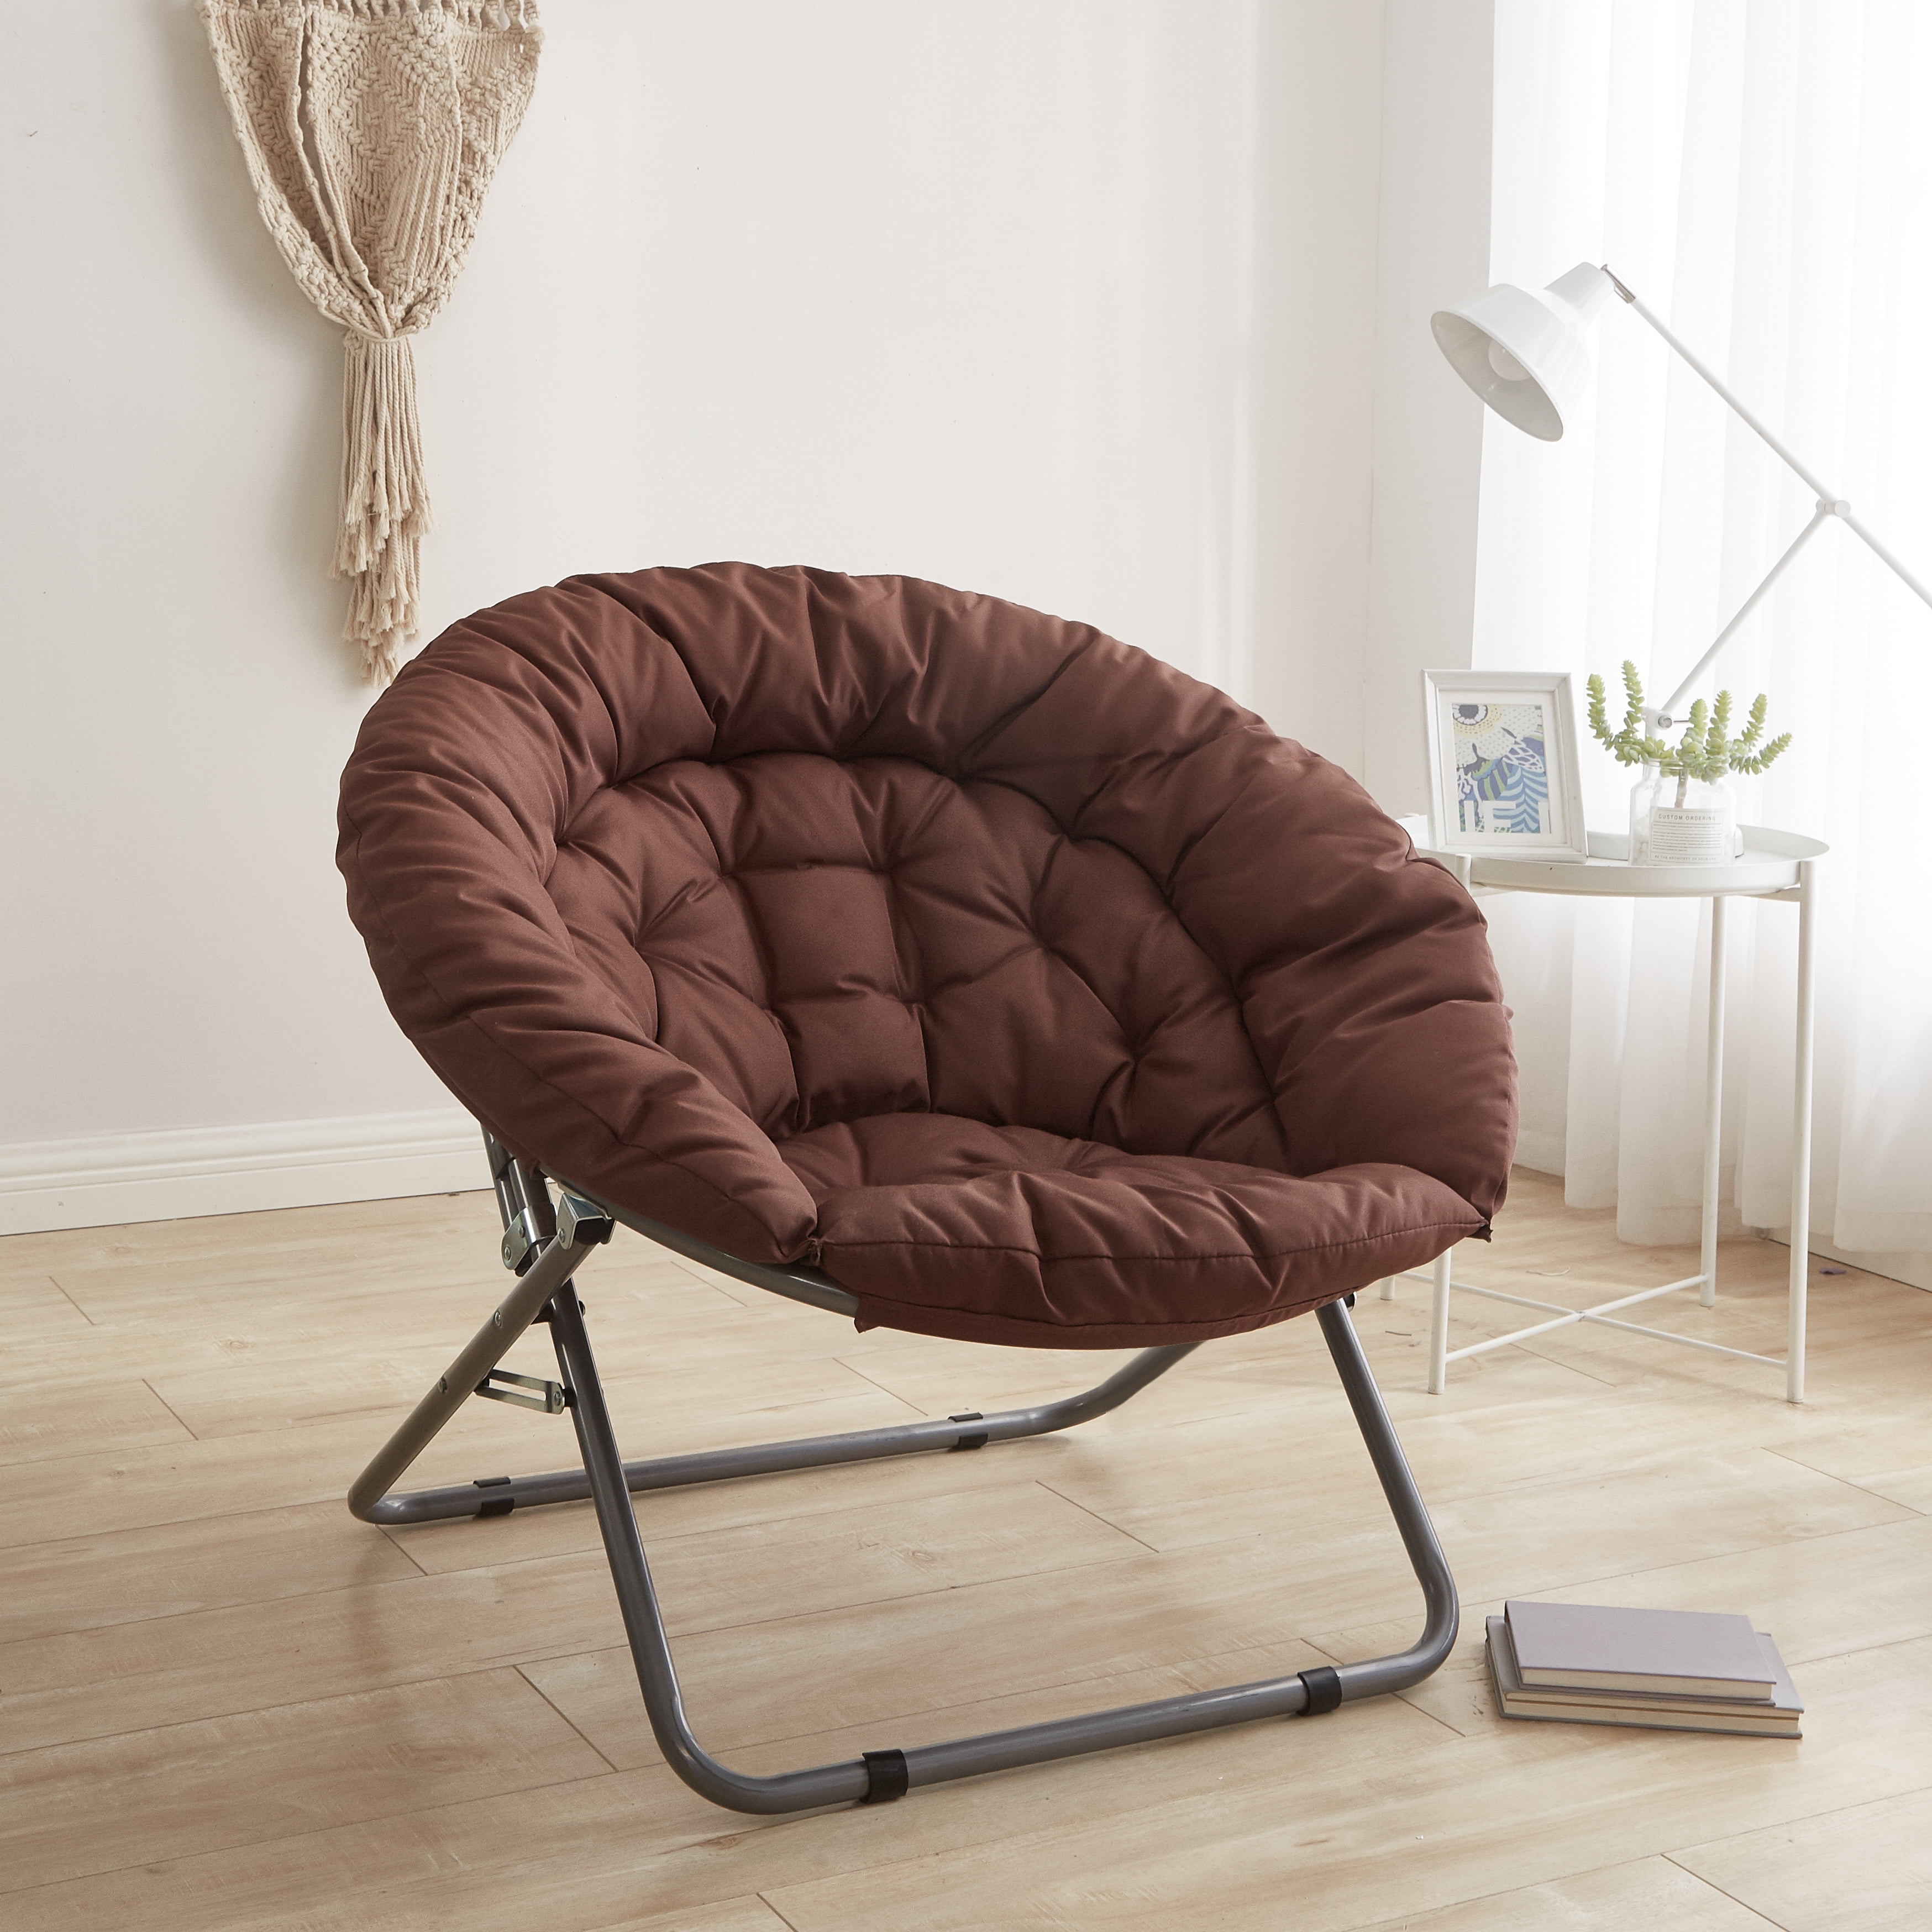 just 4 baby Kids Children Foldable Bedroom Play Room Moon Chair Moonchair 3 Princess Design 